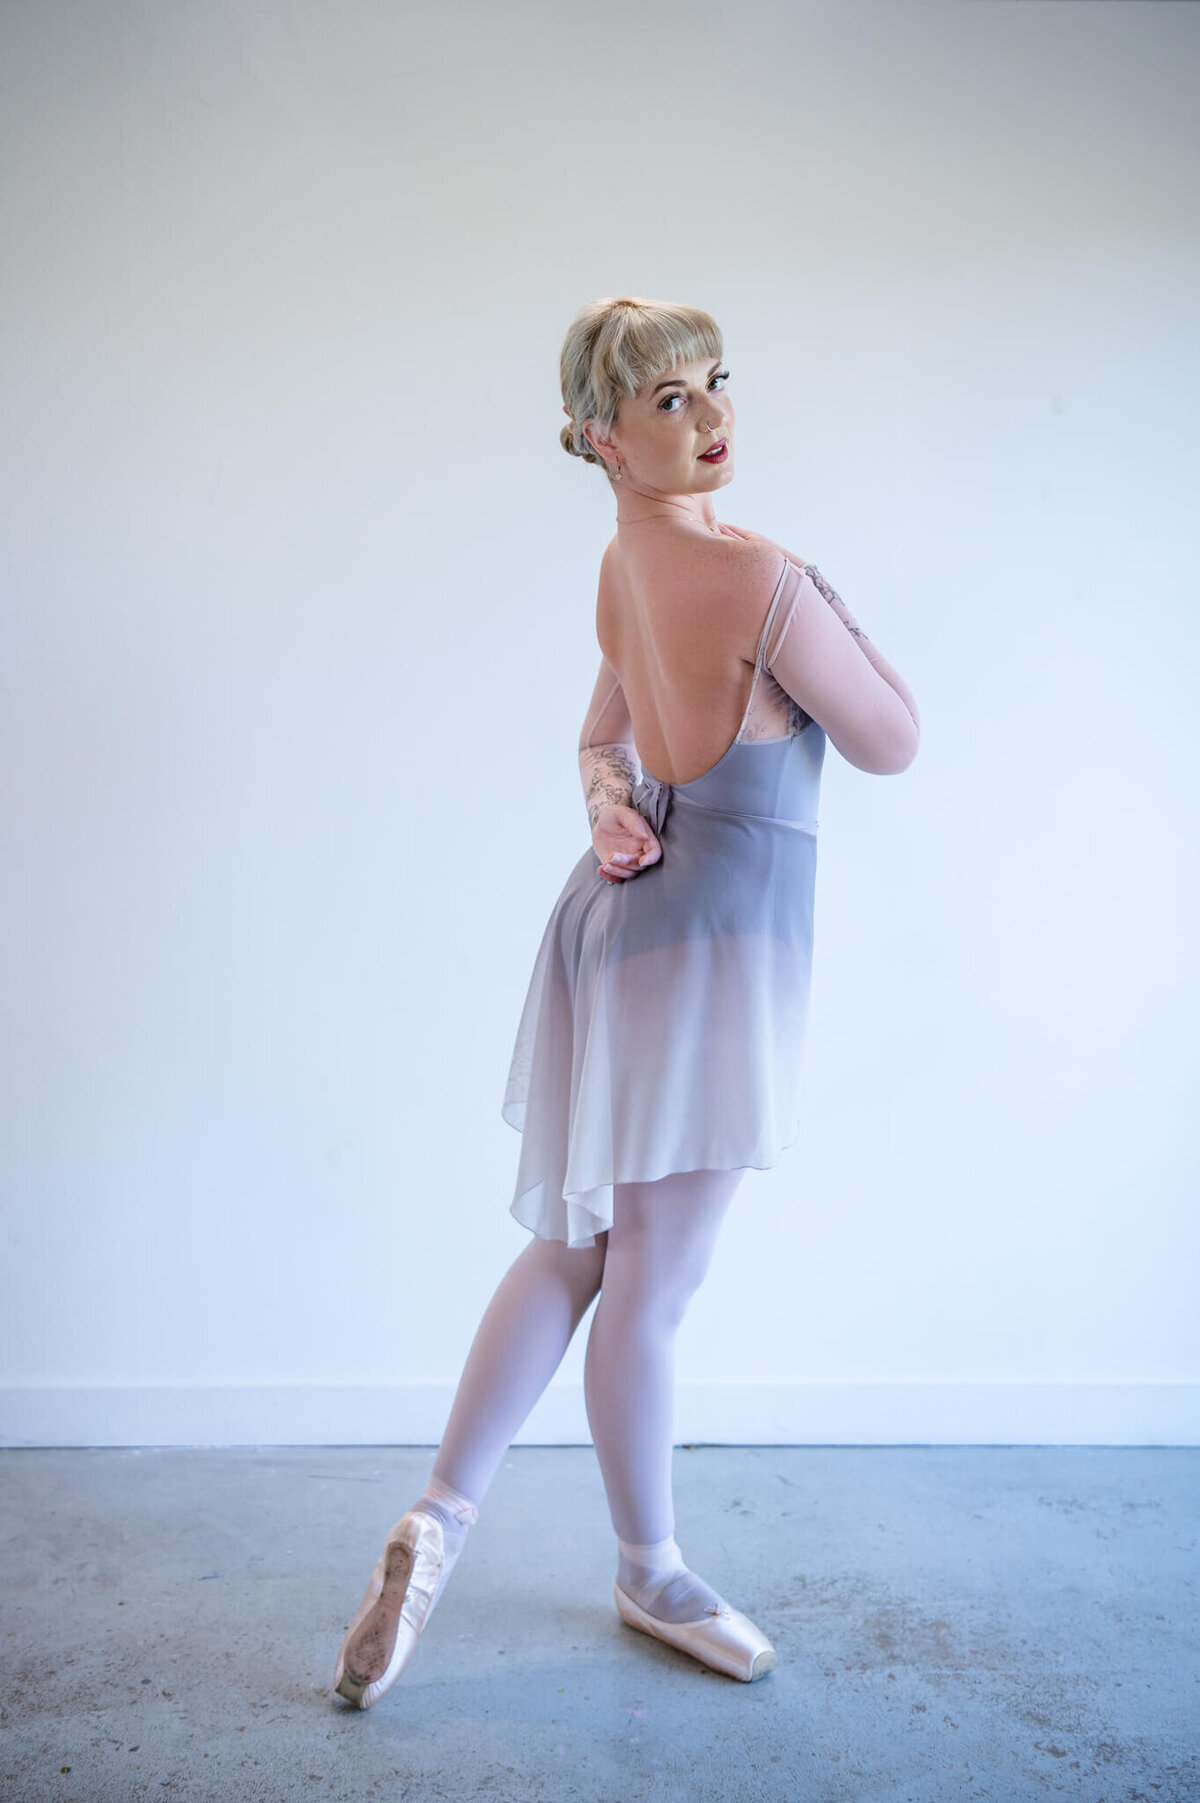 Chloe Bolam - Milton Keynes Buckinghamshire UK Branding Photographer - Ballet Dancer Brand and Headshot Photoshoot - 18.03.2022 -2